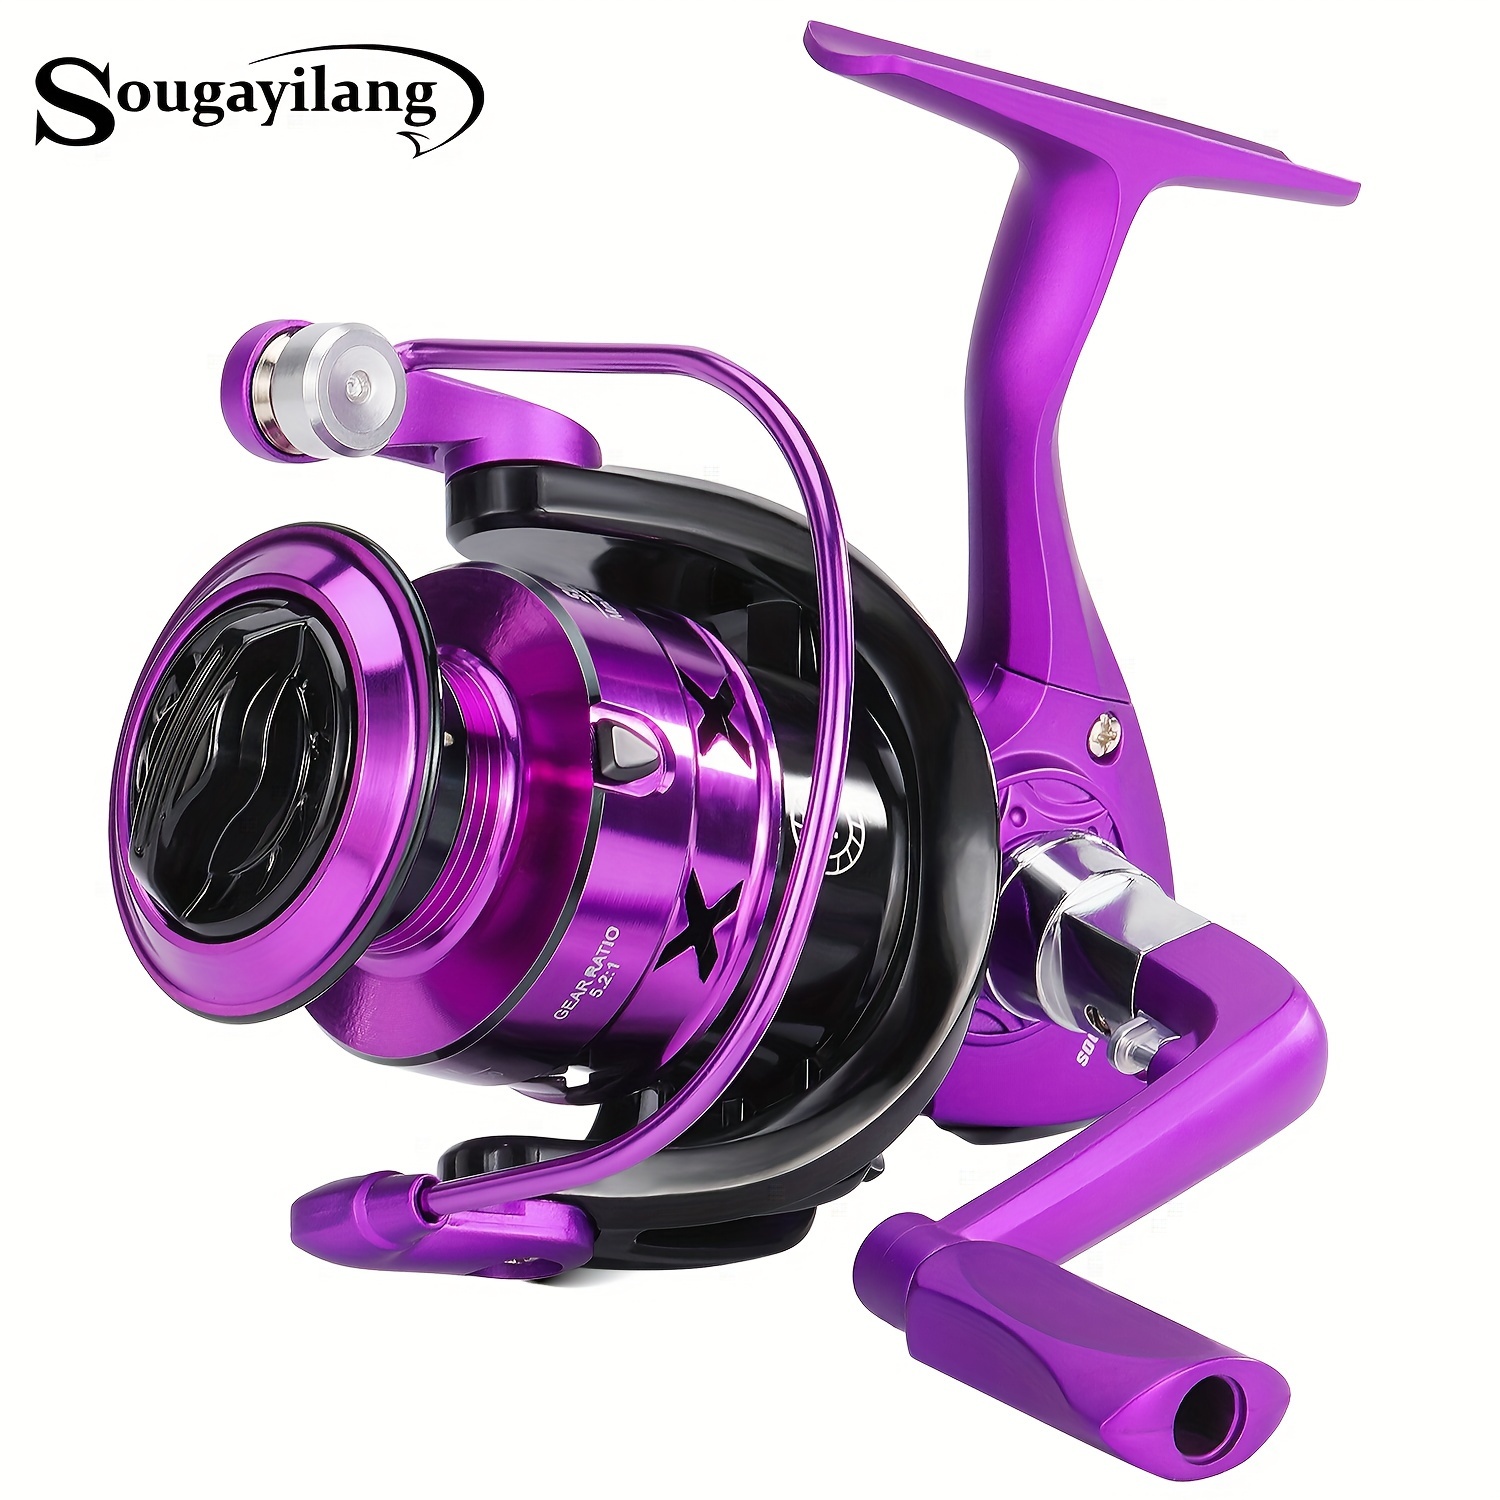 Sougayilang 5.2:1 Gear Ratio Spinning Fishing Reel 1000 7000